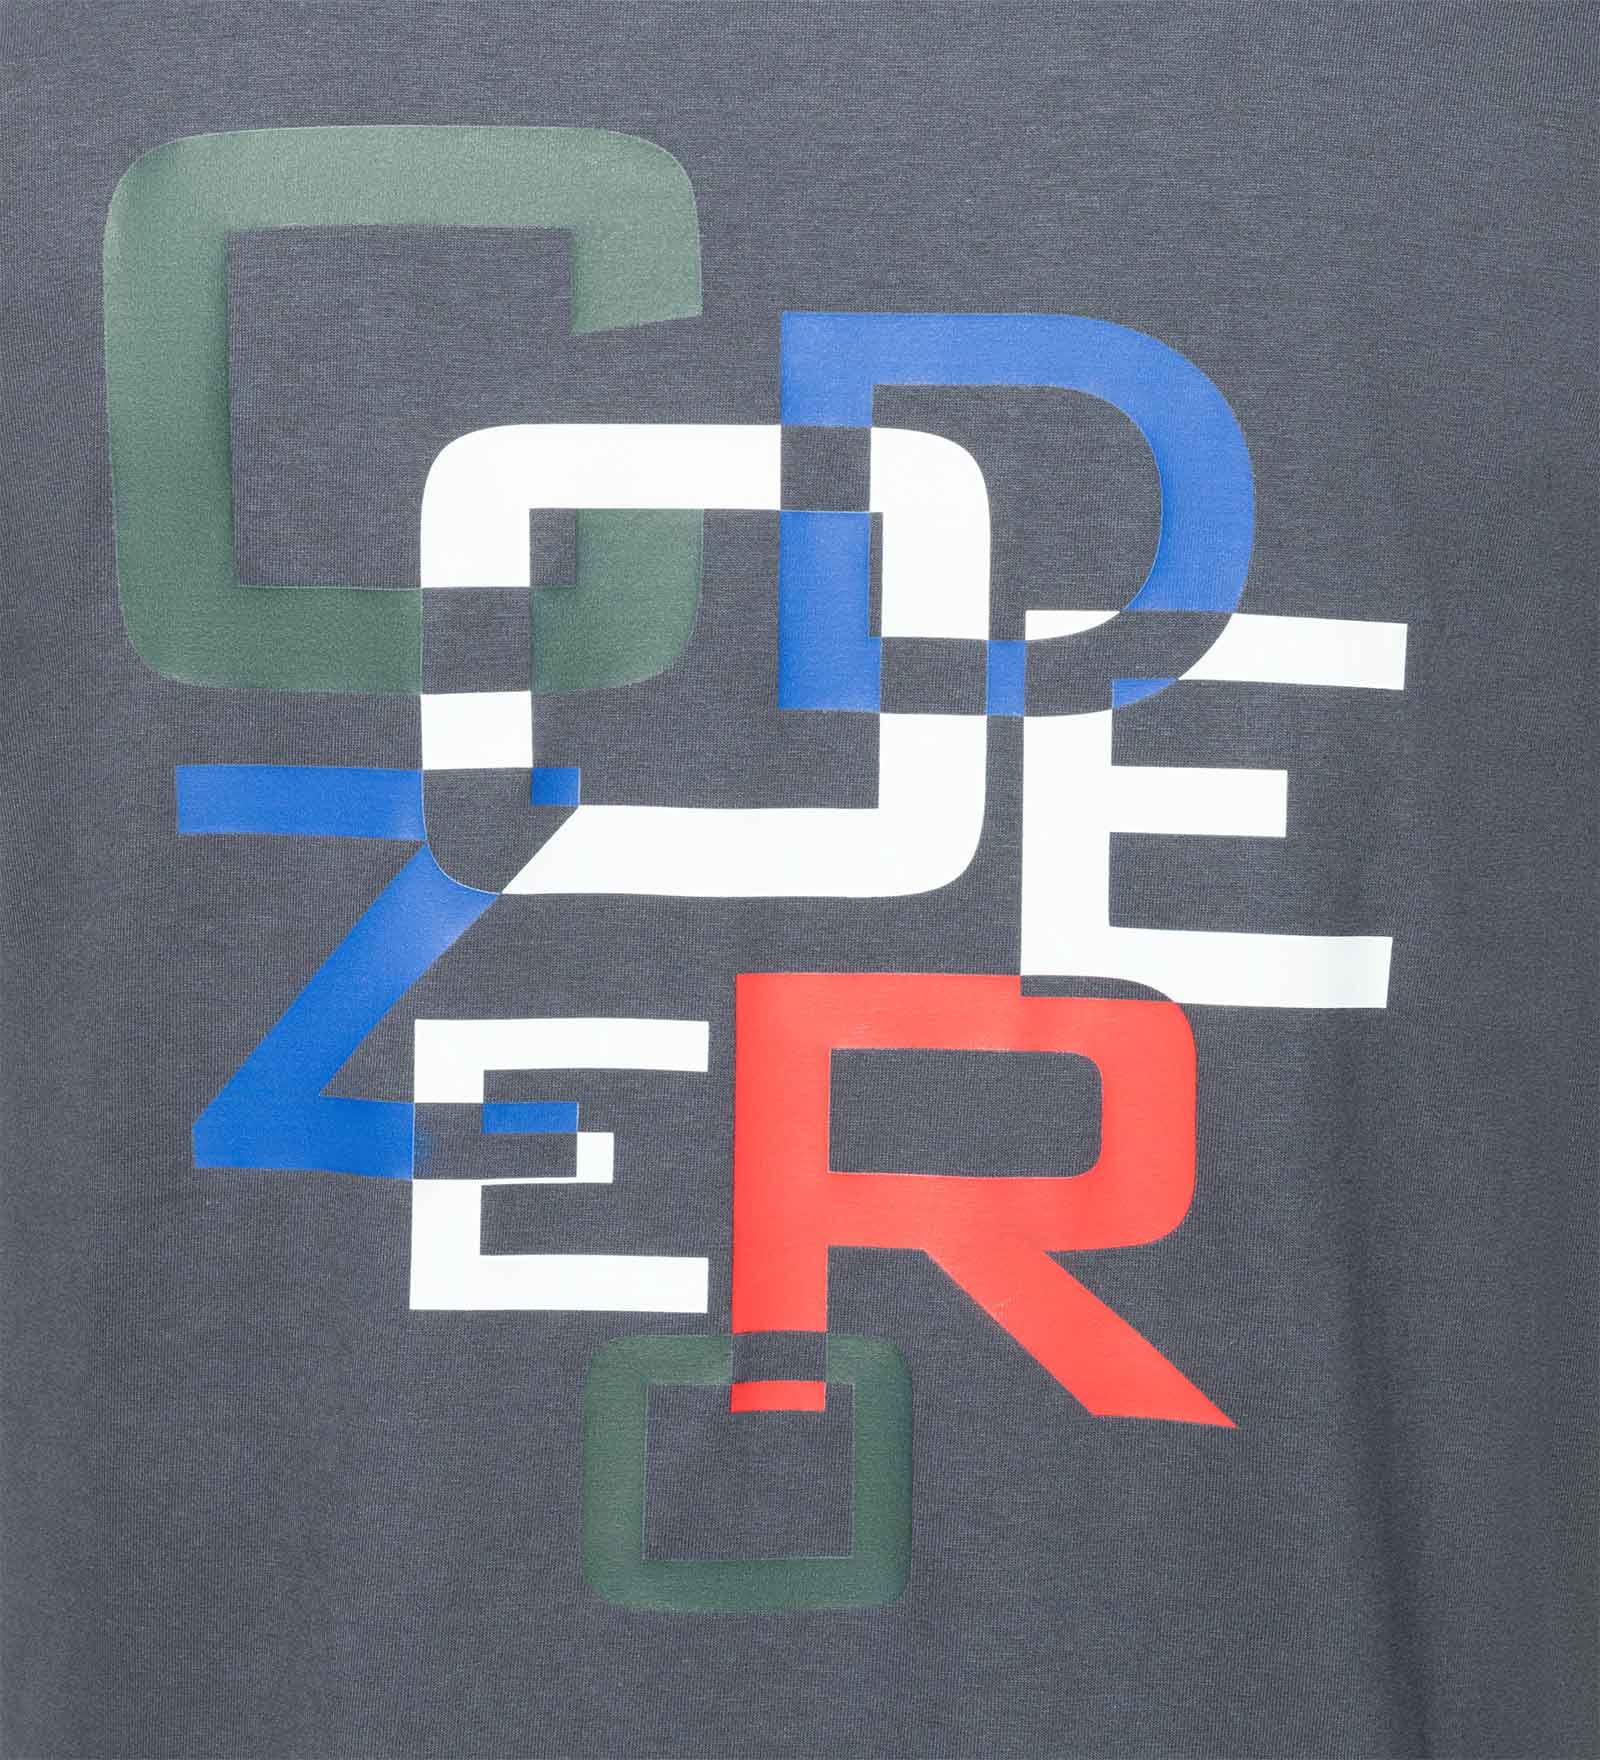 T-Shirt CODE-ZERO blue-grey